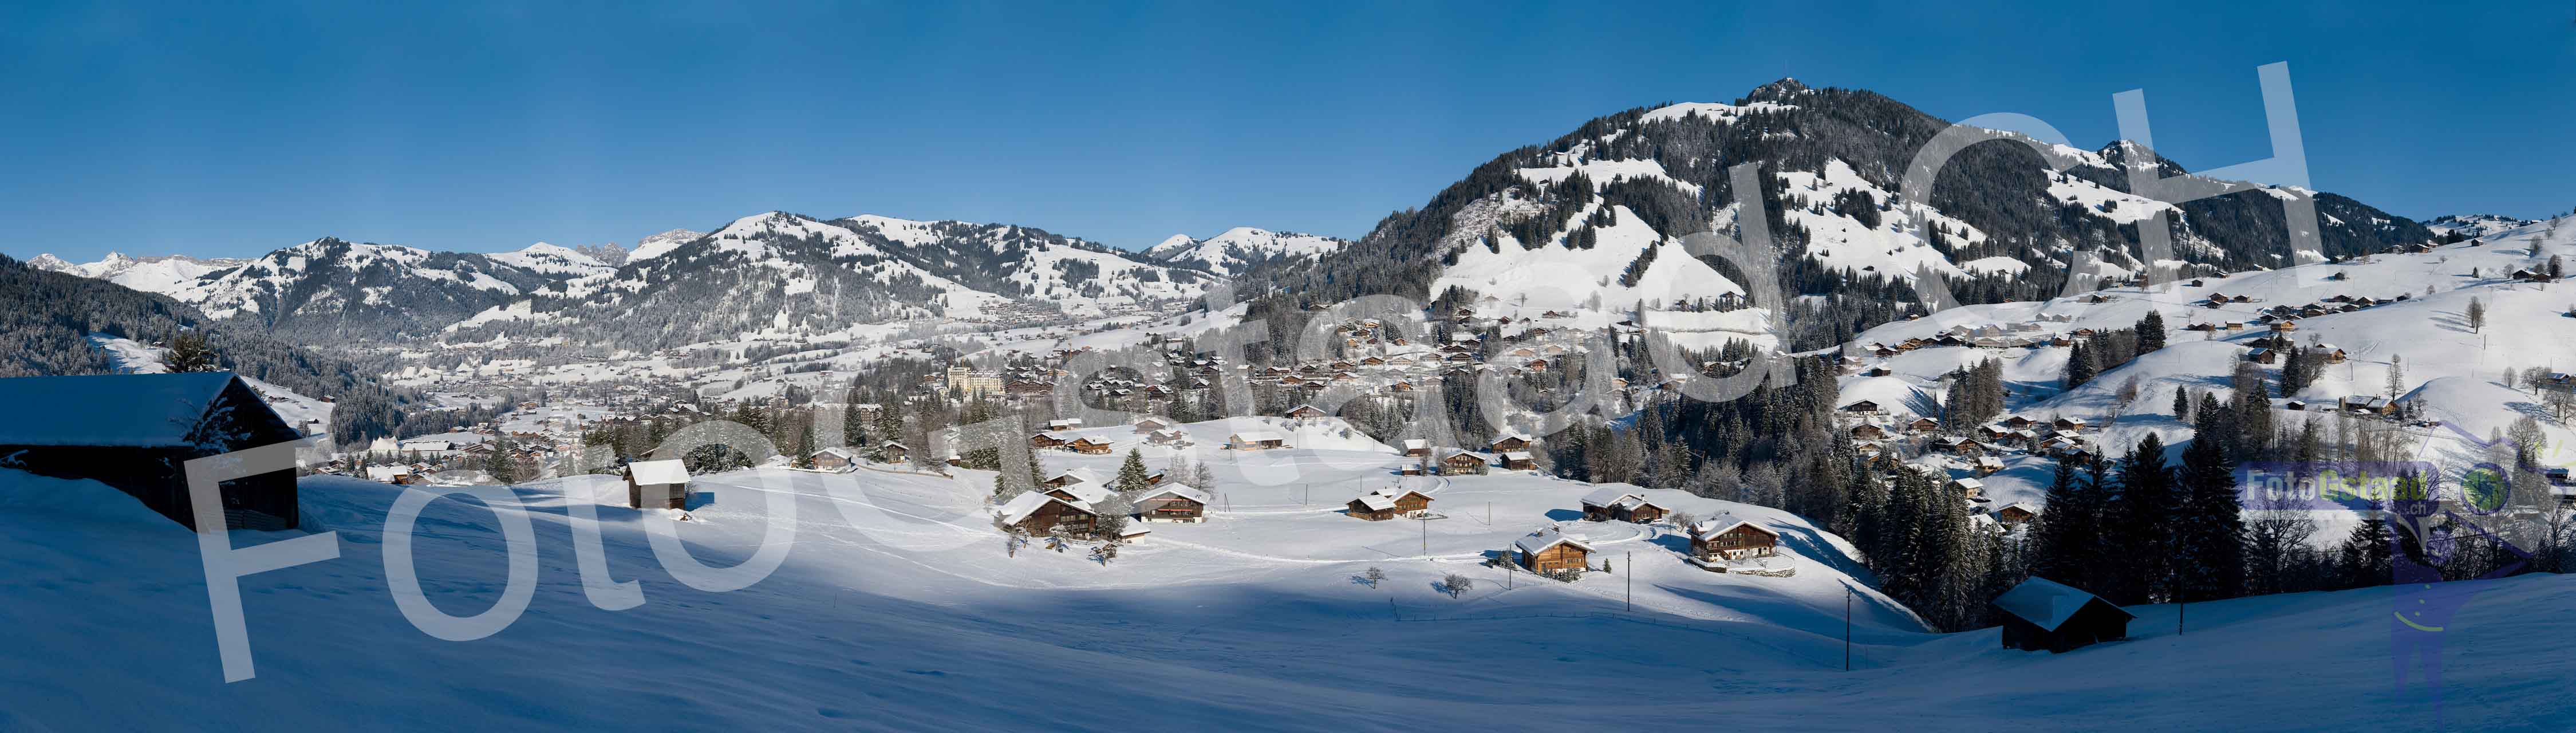 Gstaad Winter 03